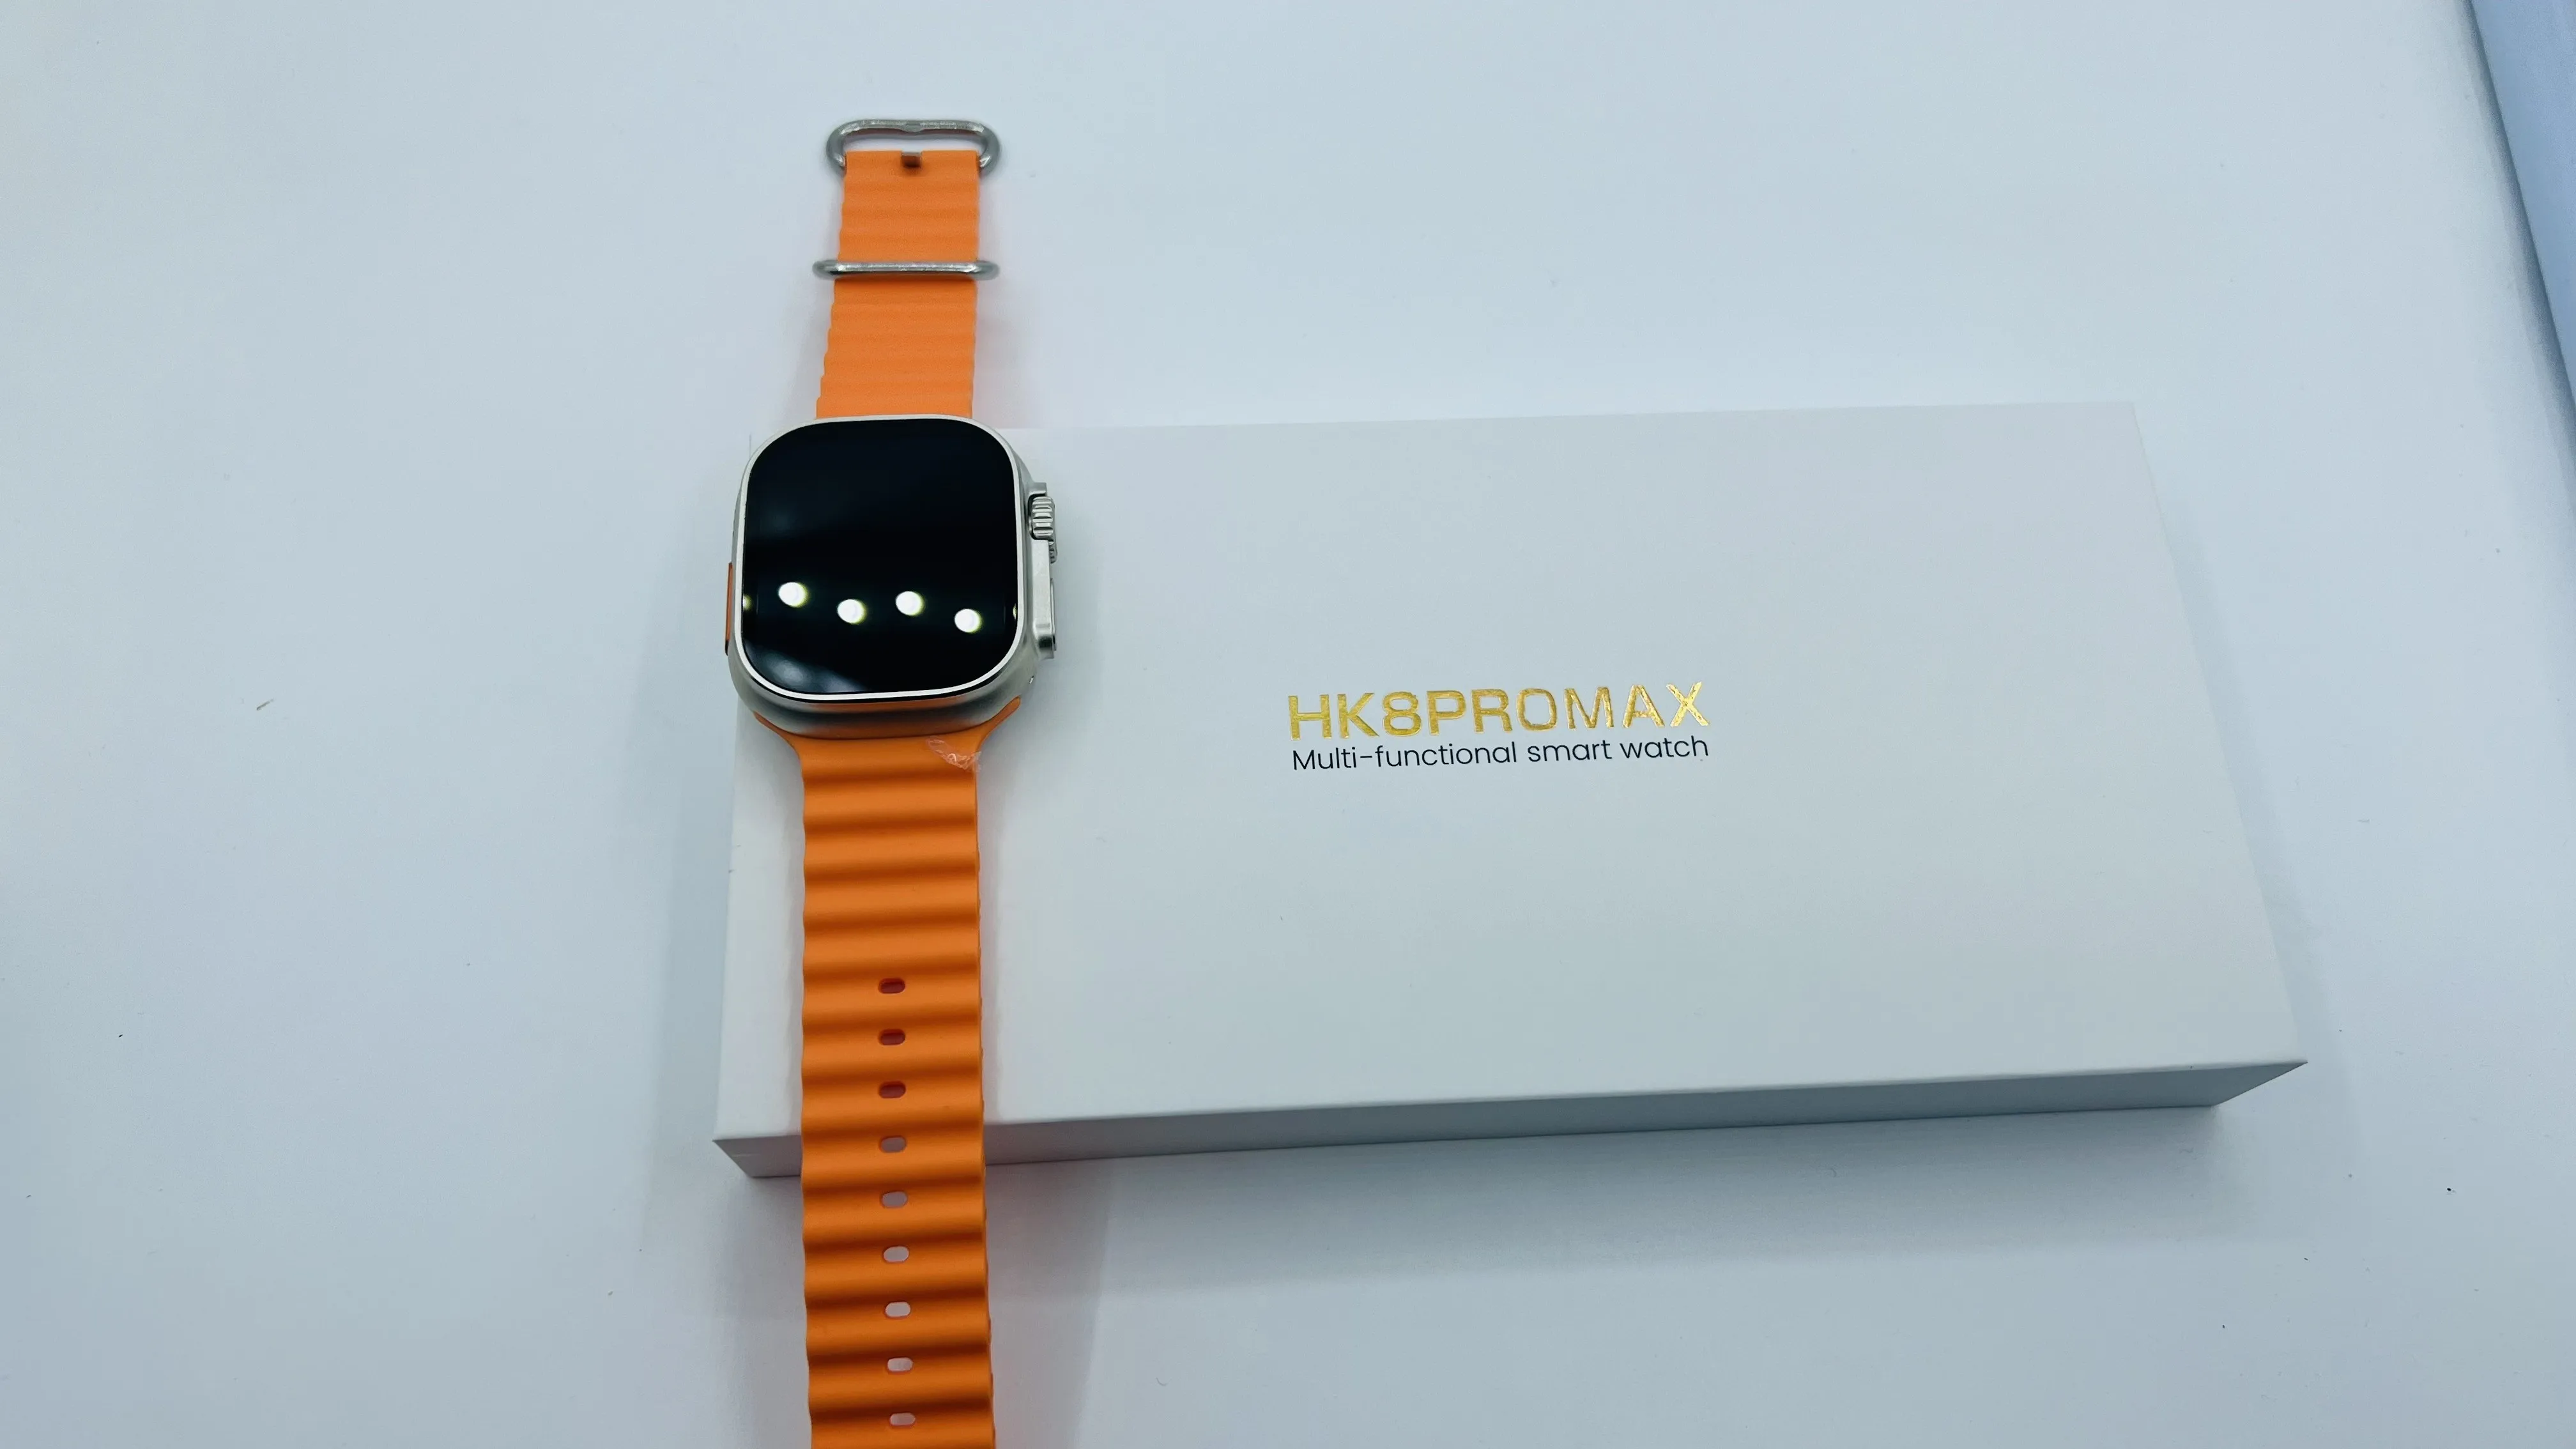 Series 8 Ultra Smartwatch HK8 Pro Max 49mm Fitness Tracker AMOLED Full Touch Screen Reloj Smart Watch